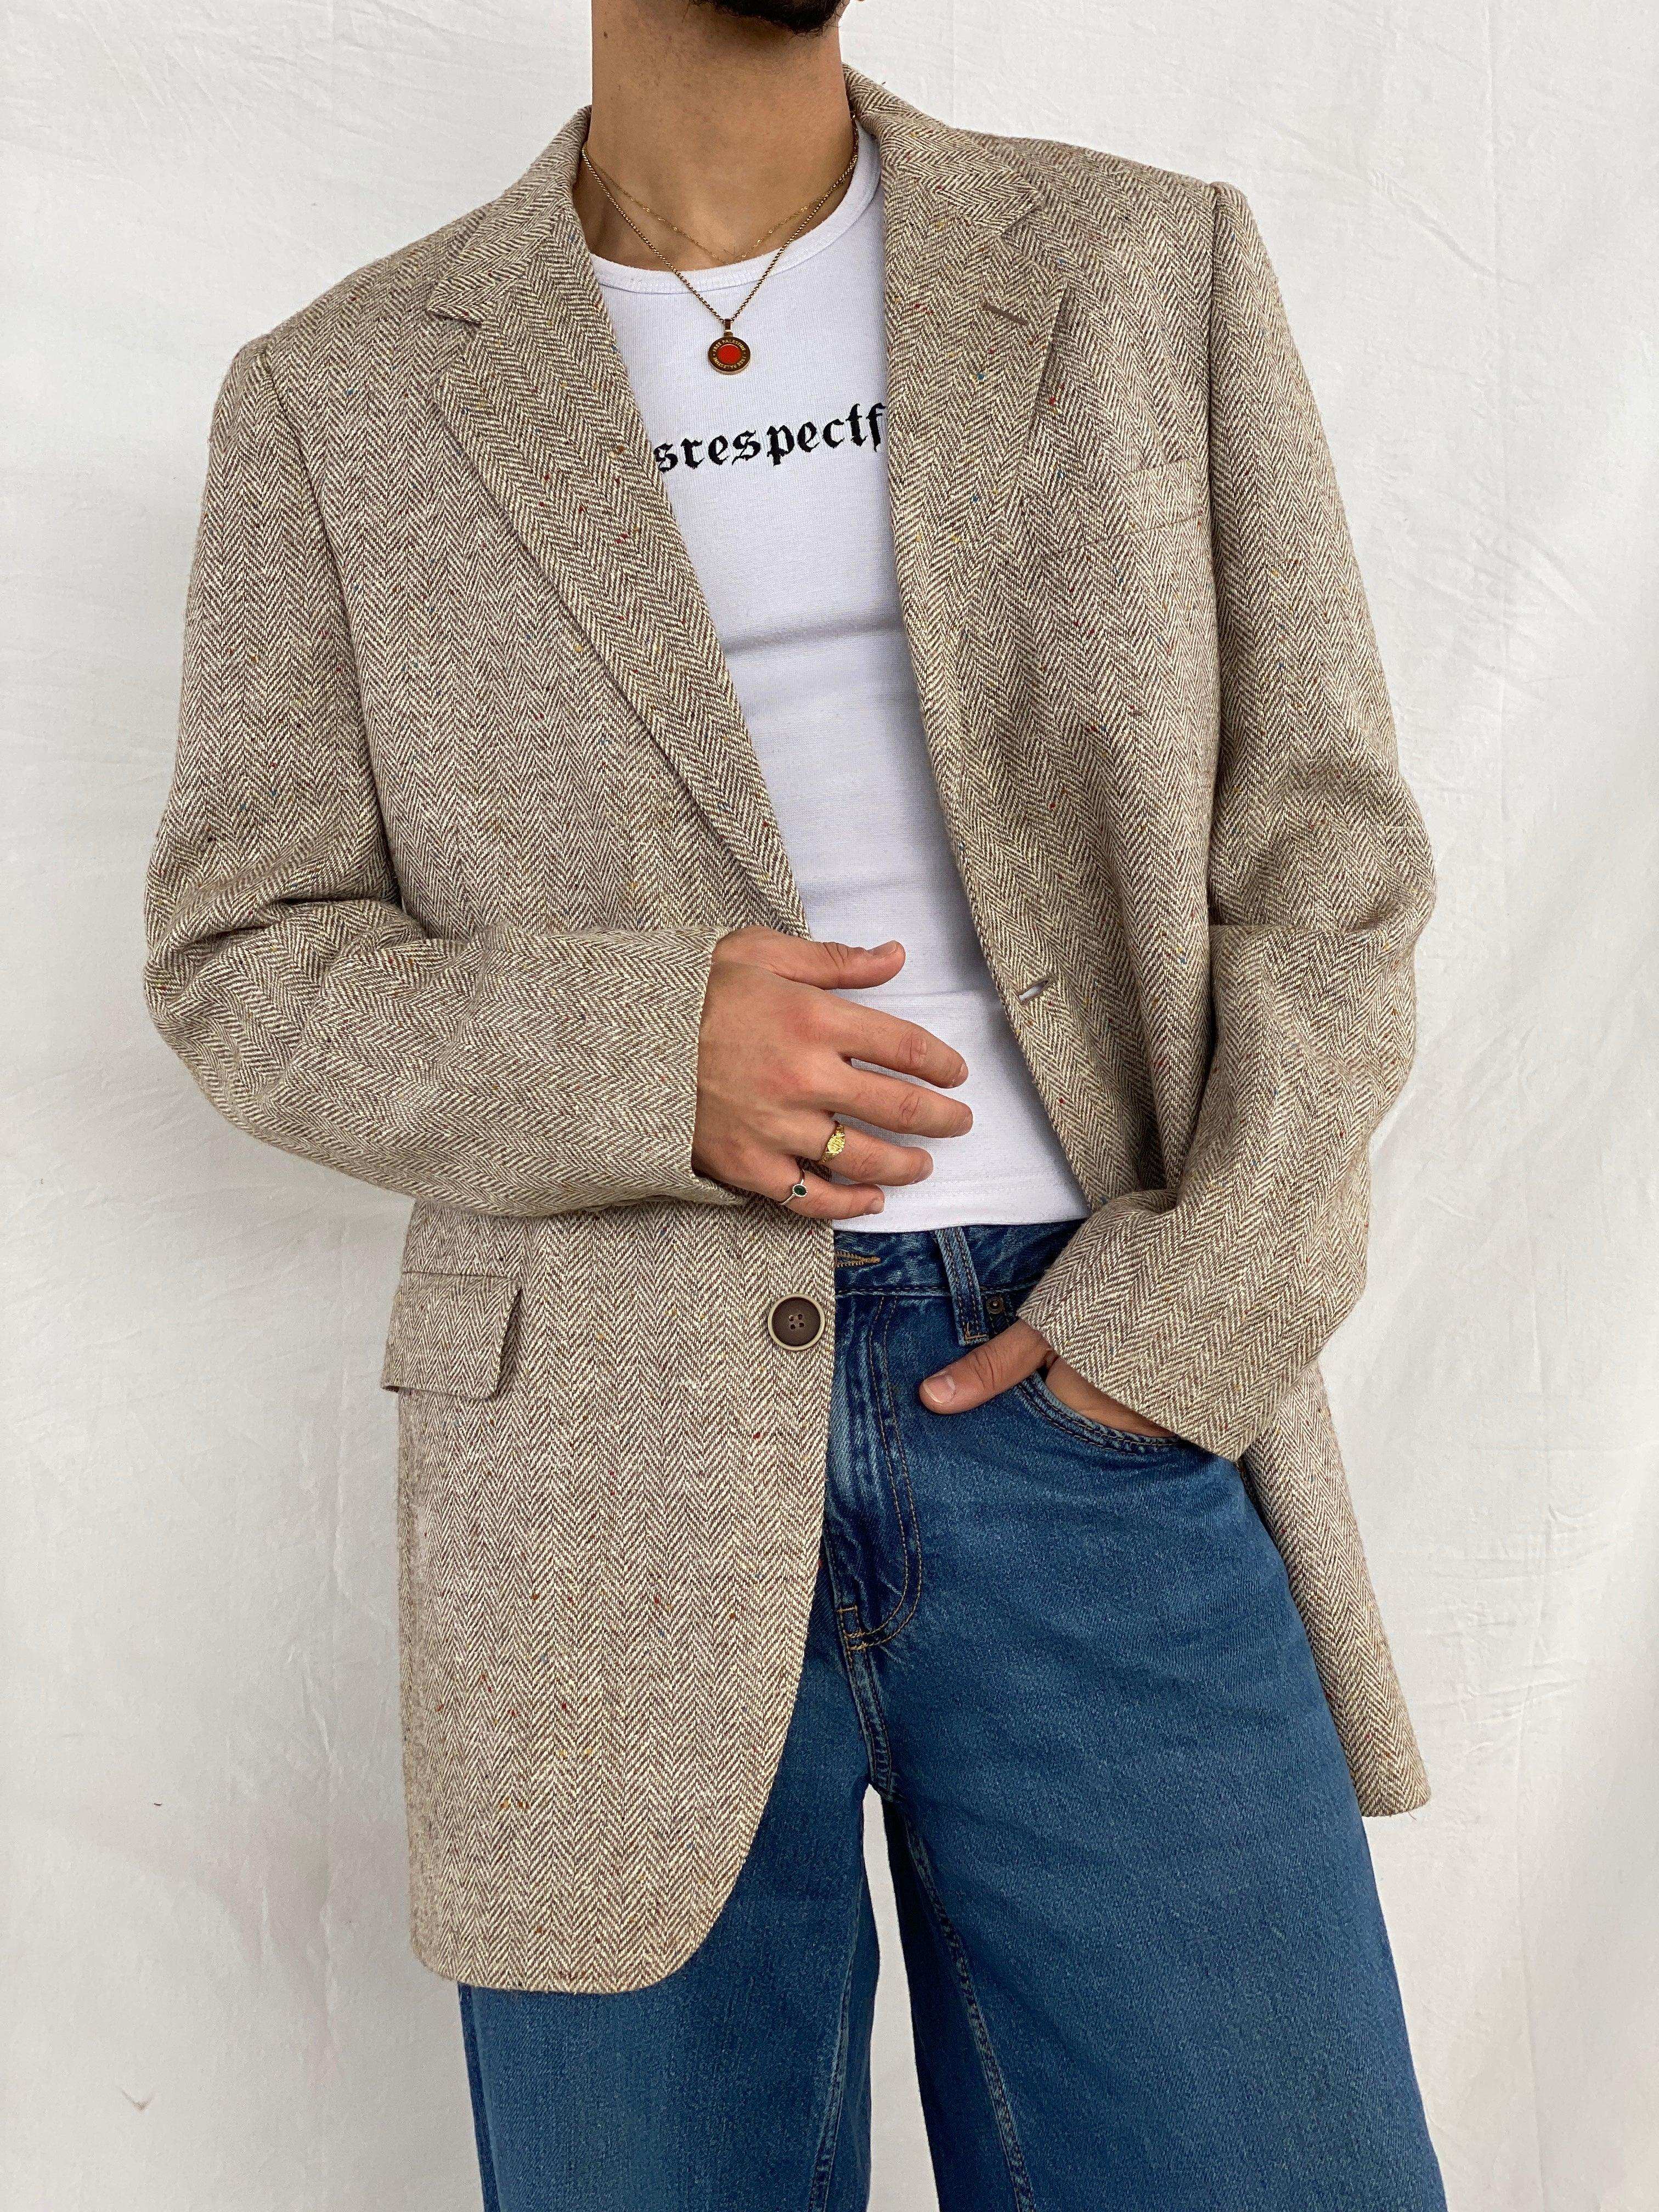 Wintage Men's Tweed Casual and Festive Blazer Coat Jacket : Beige1